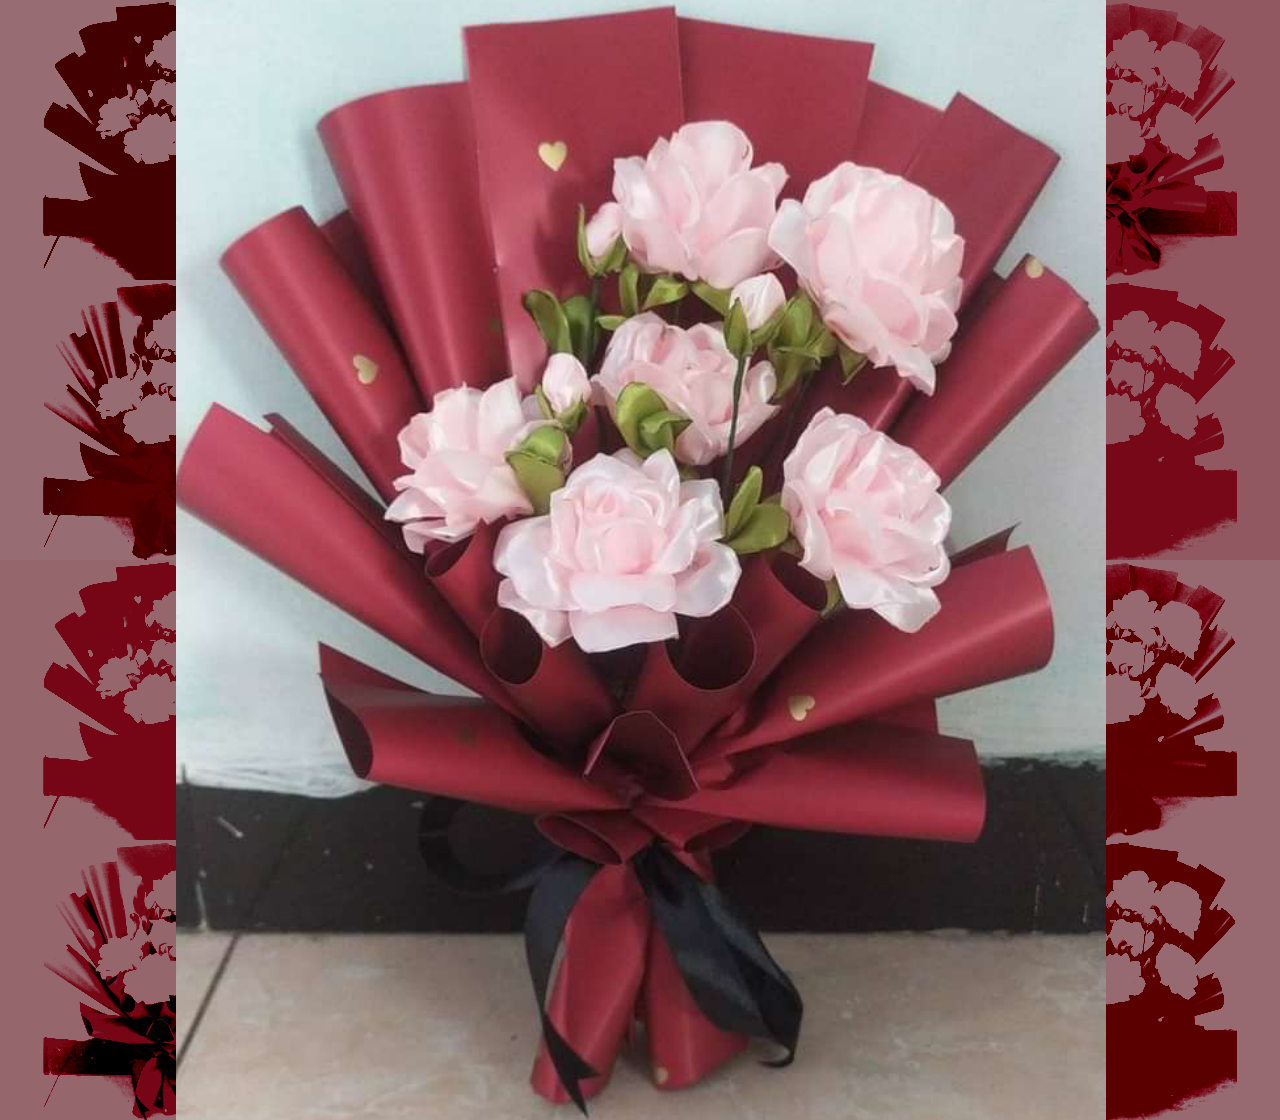 Desain Buket Bunga Mawar dari Pita Satin yang Cantik dan Menarik